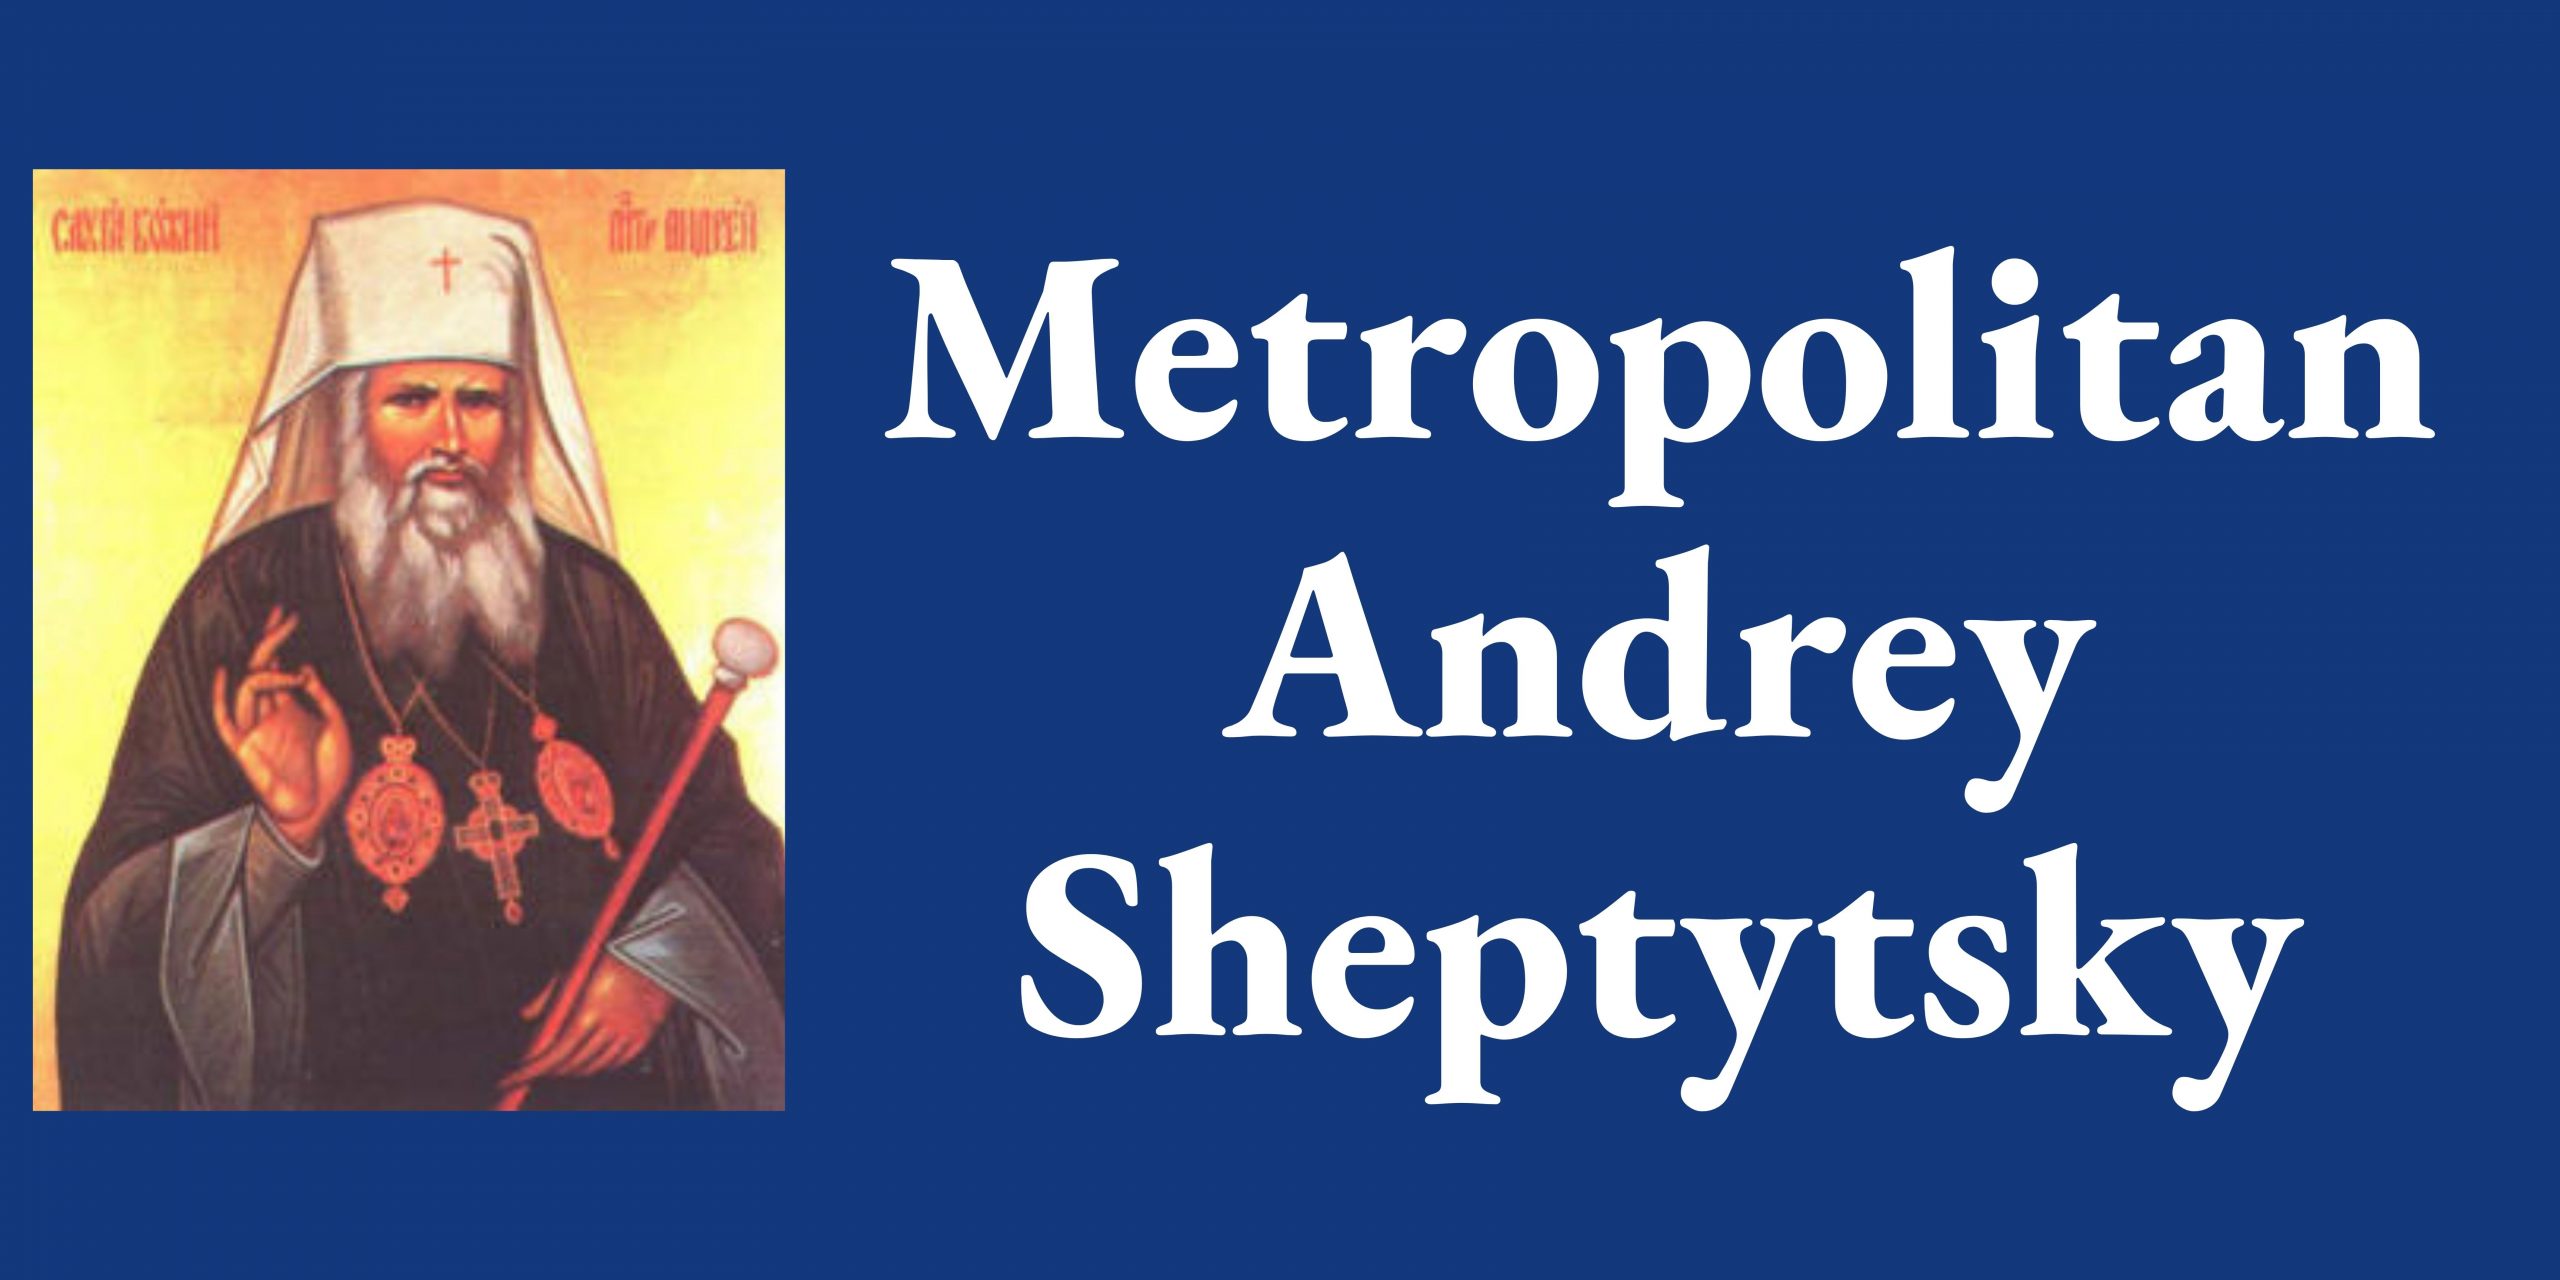 Metropolitan Andrey Sheptytsky